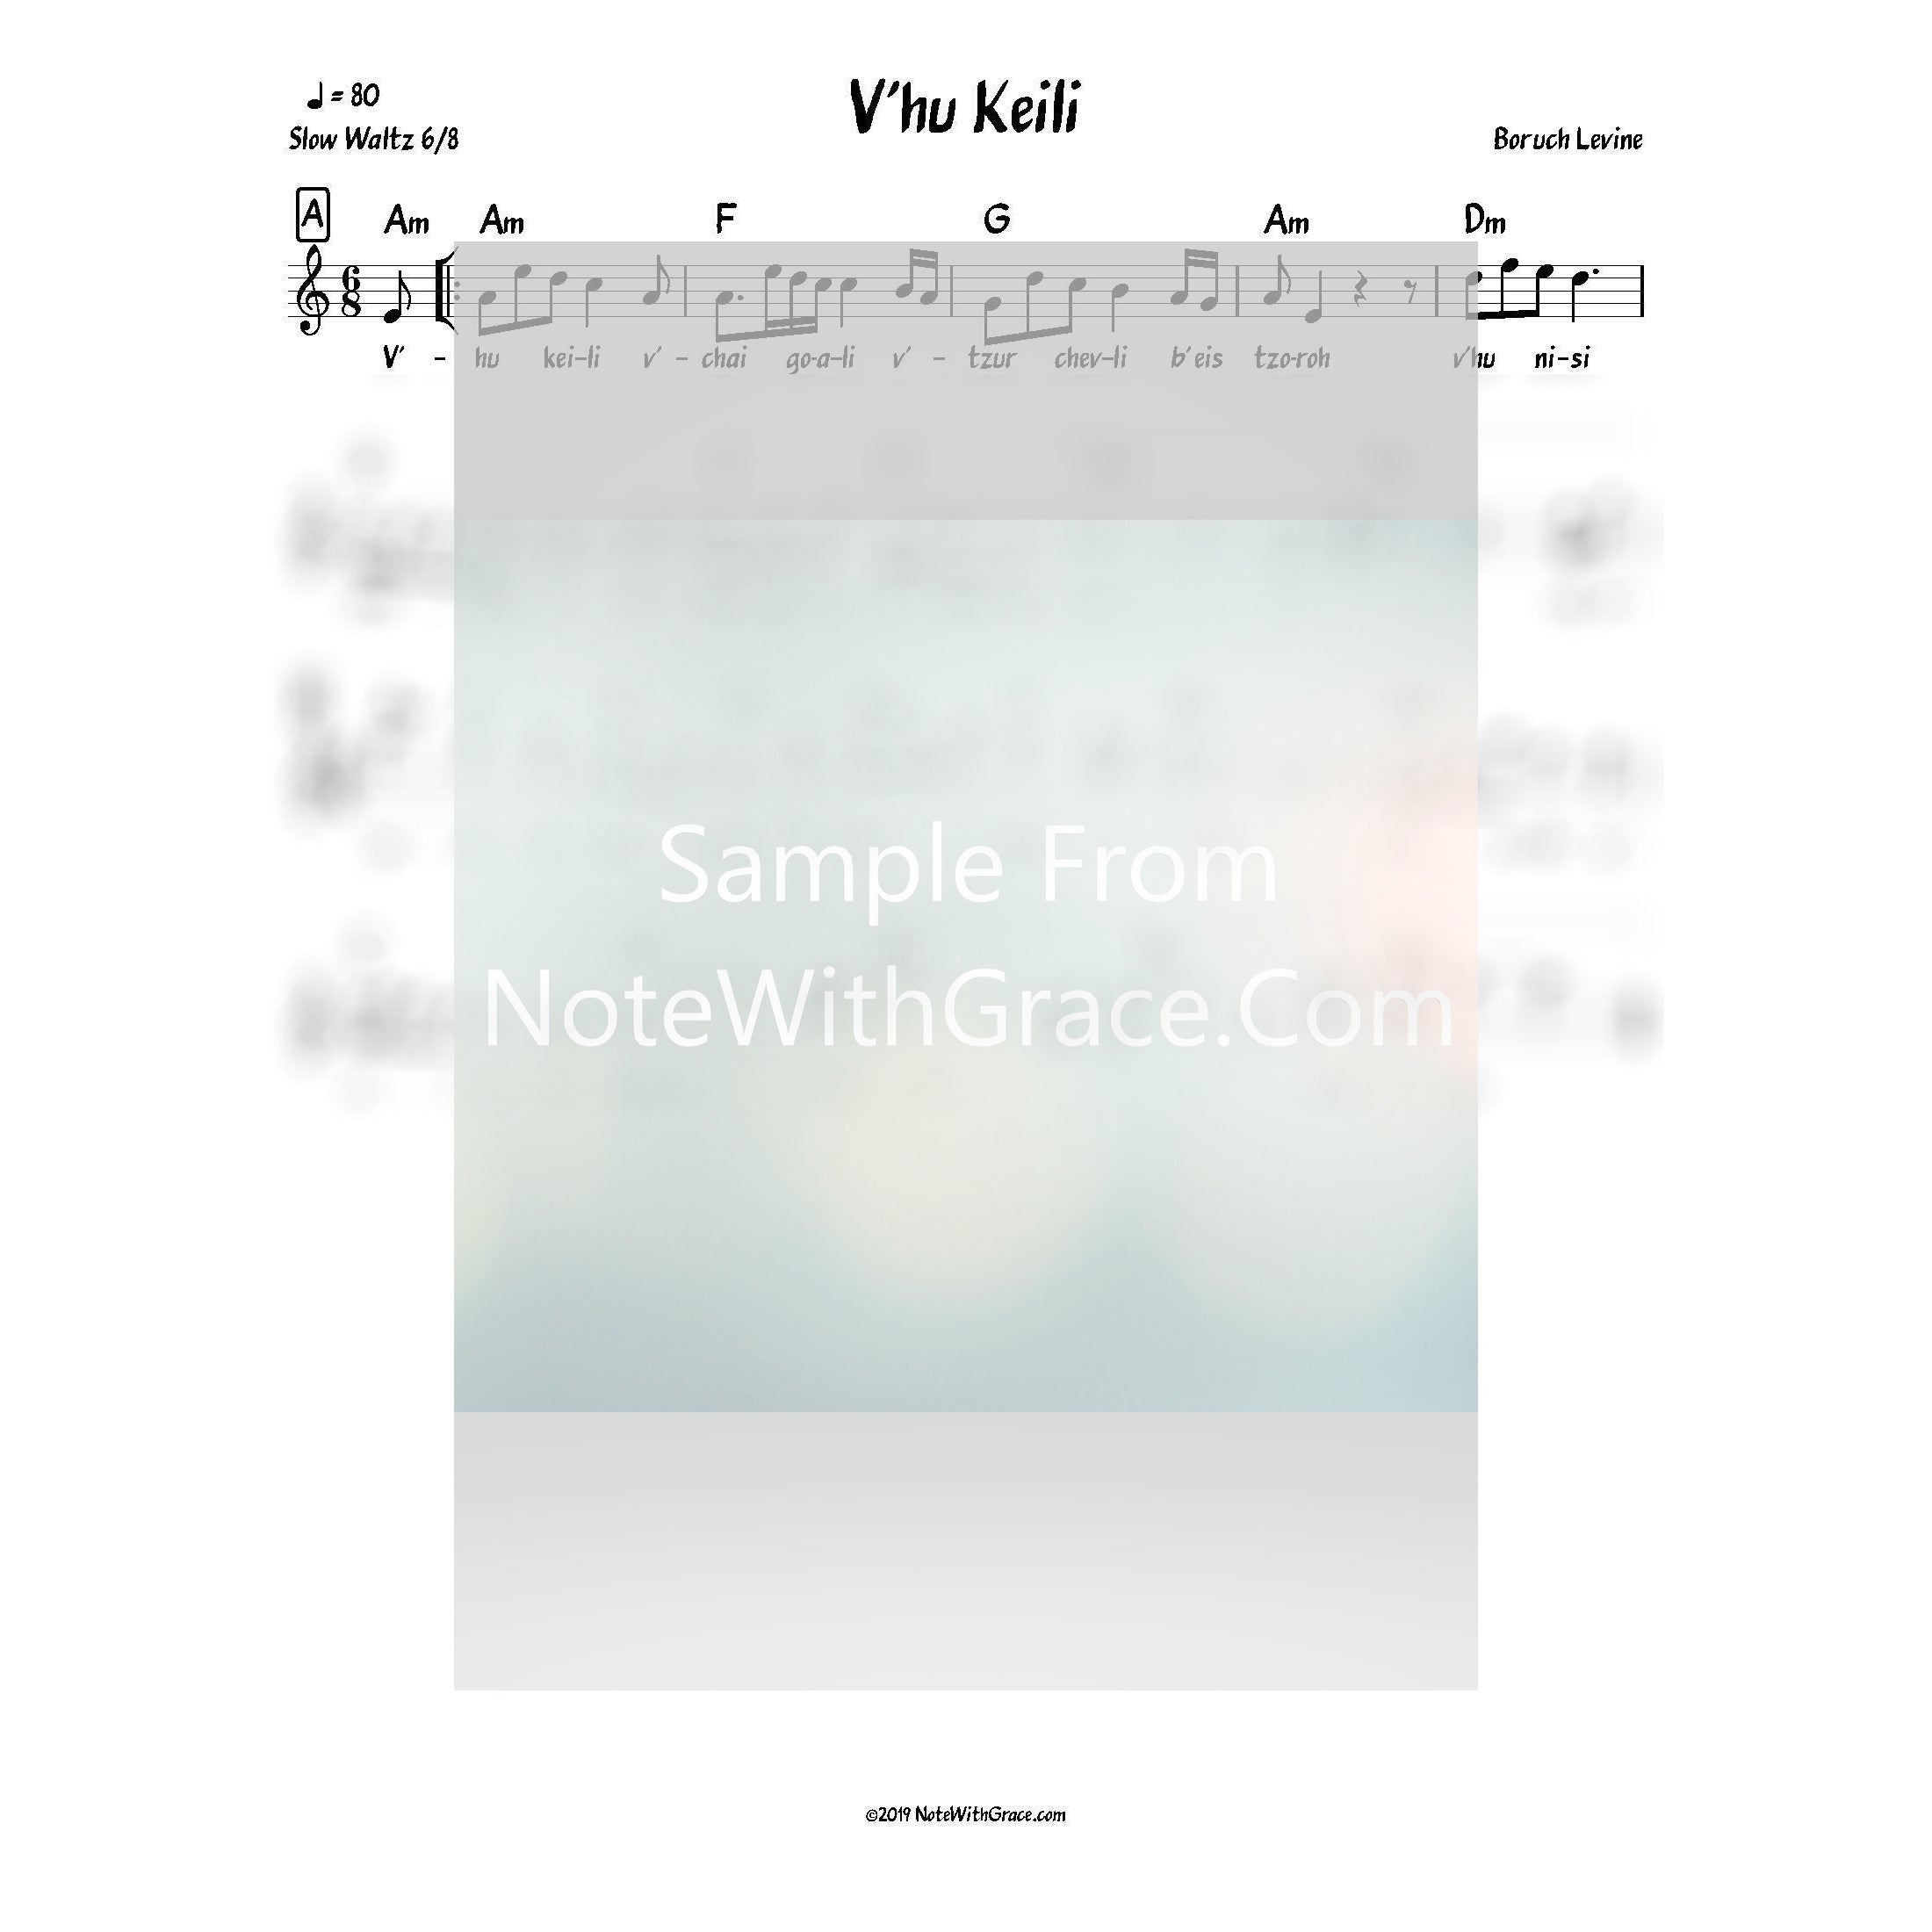 V'hu Keili Lead Sheet (Boruch Levine)-Sheet music-NoteWithGrace.com